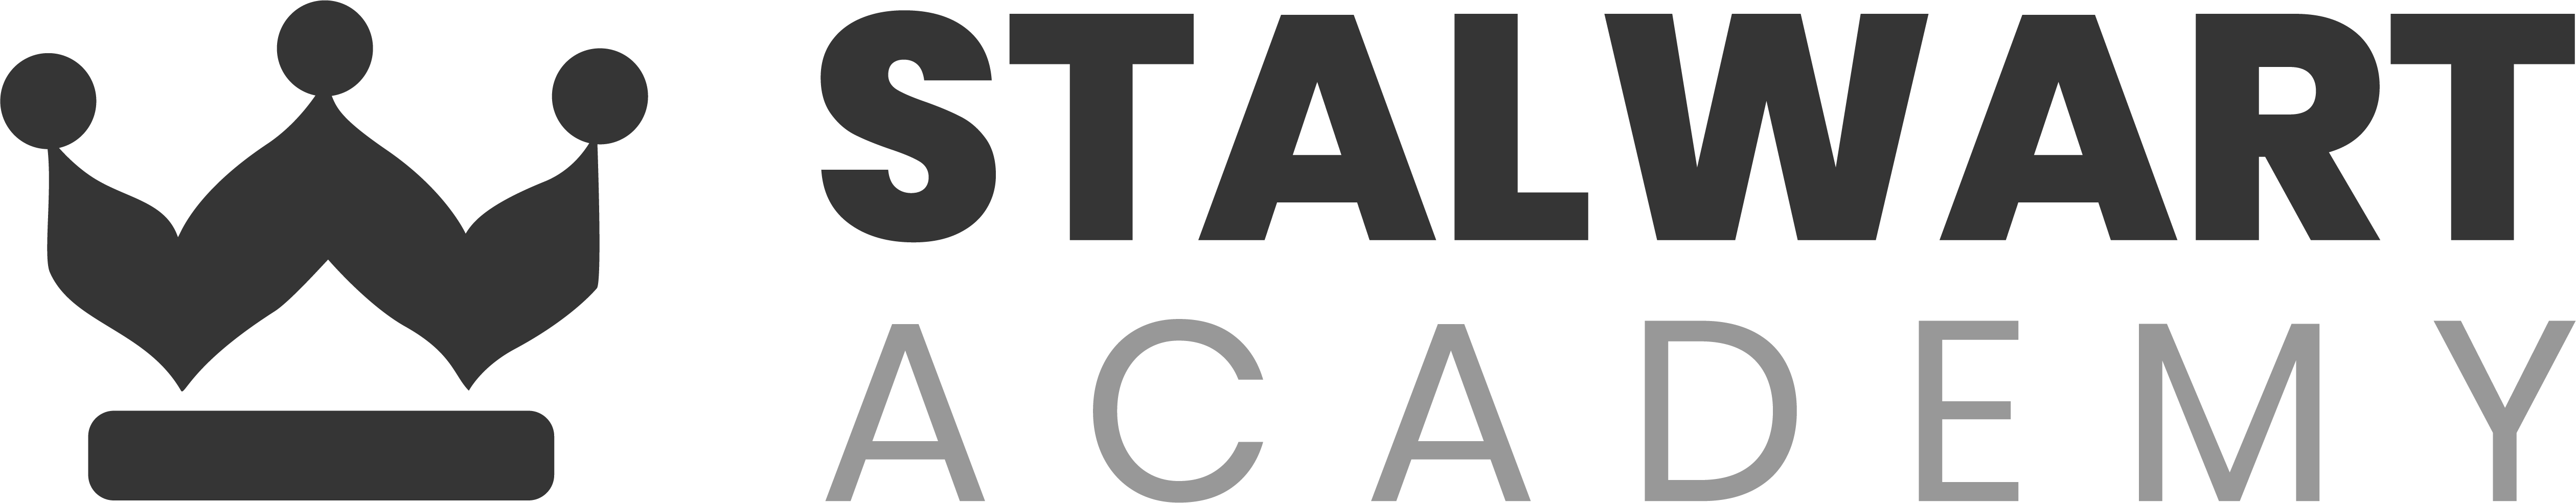 Stalwart Academy logo